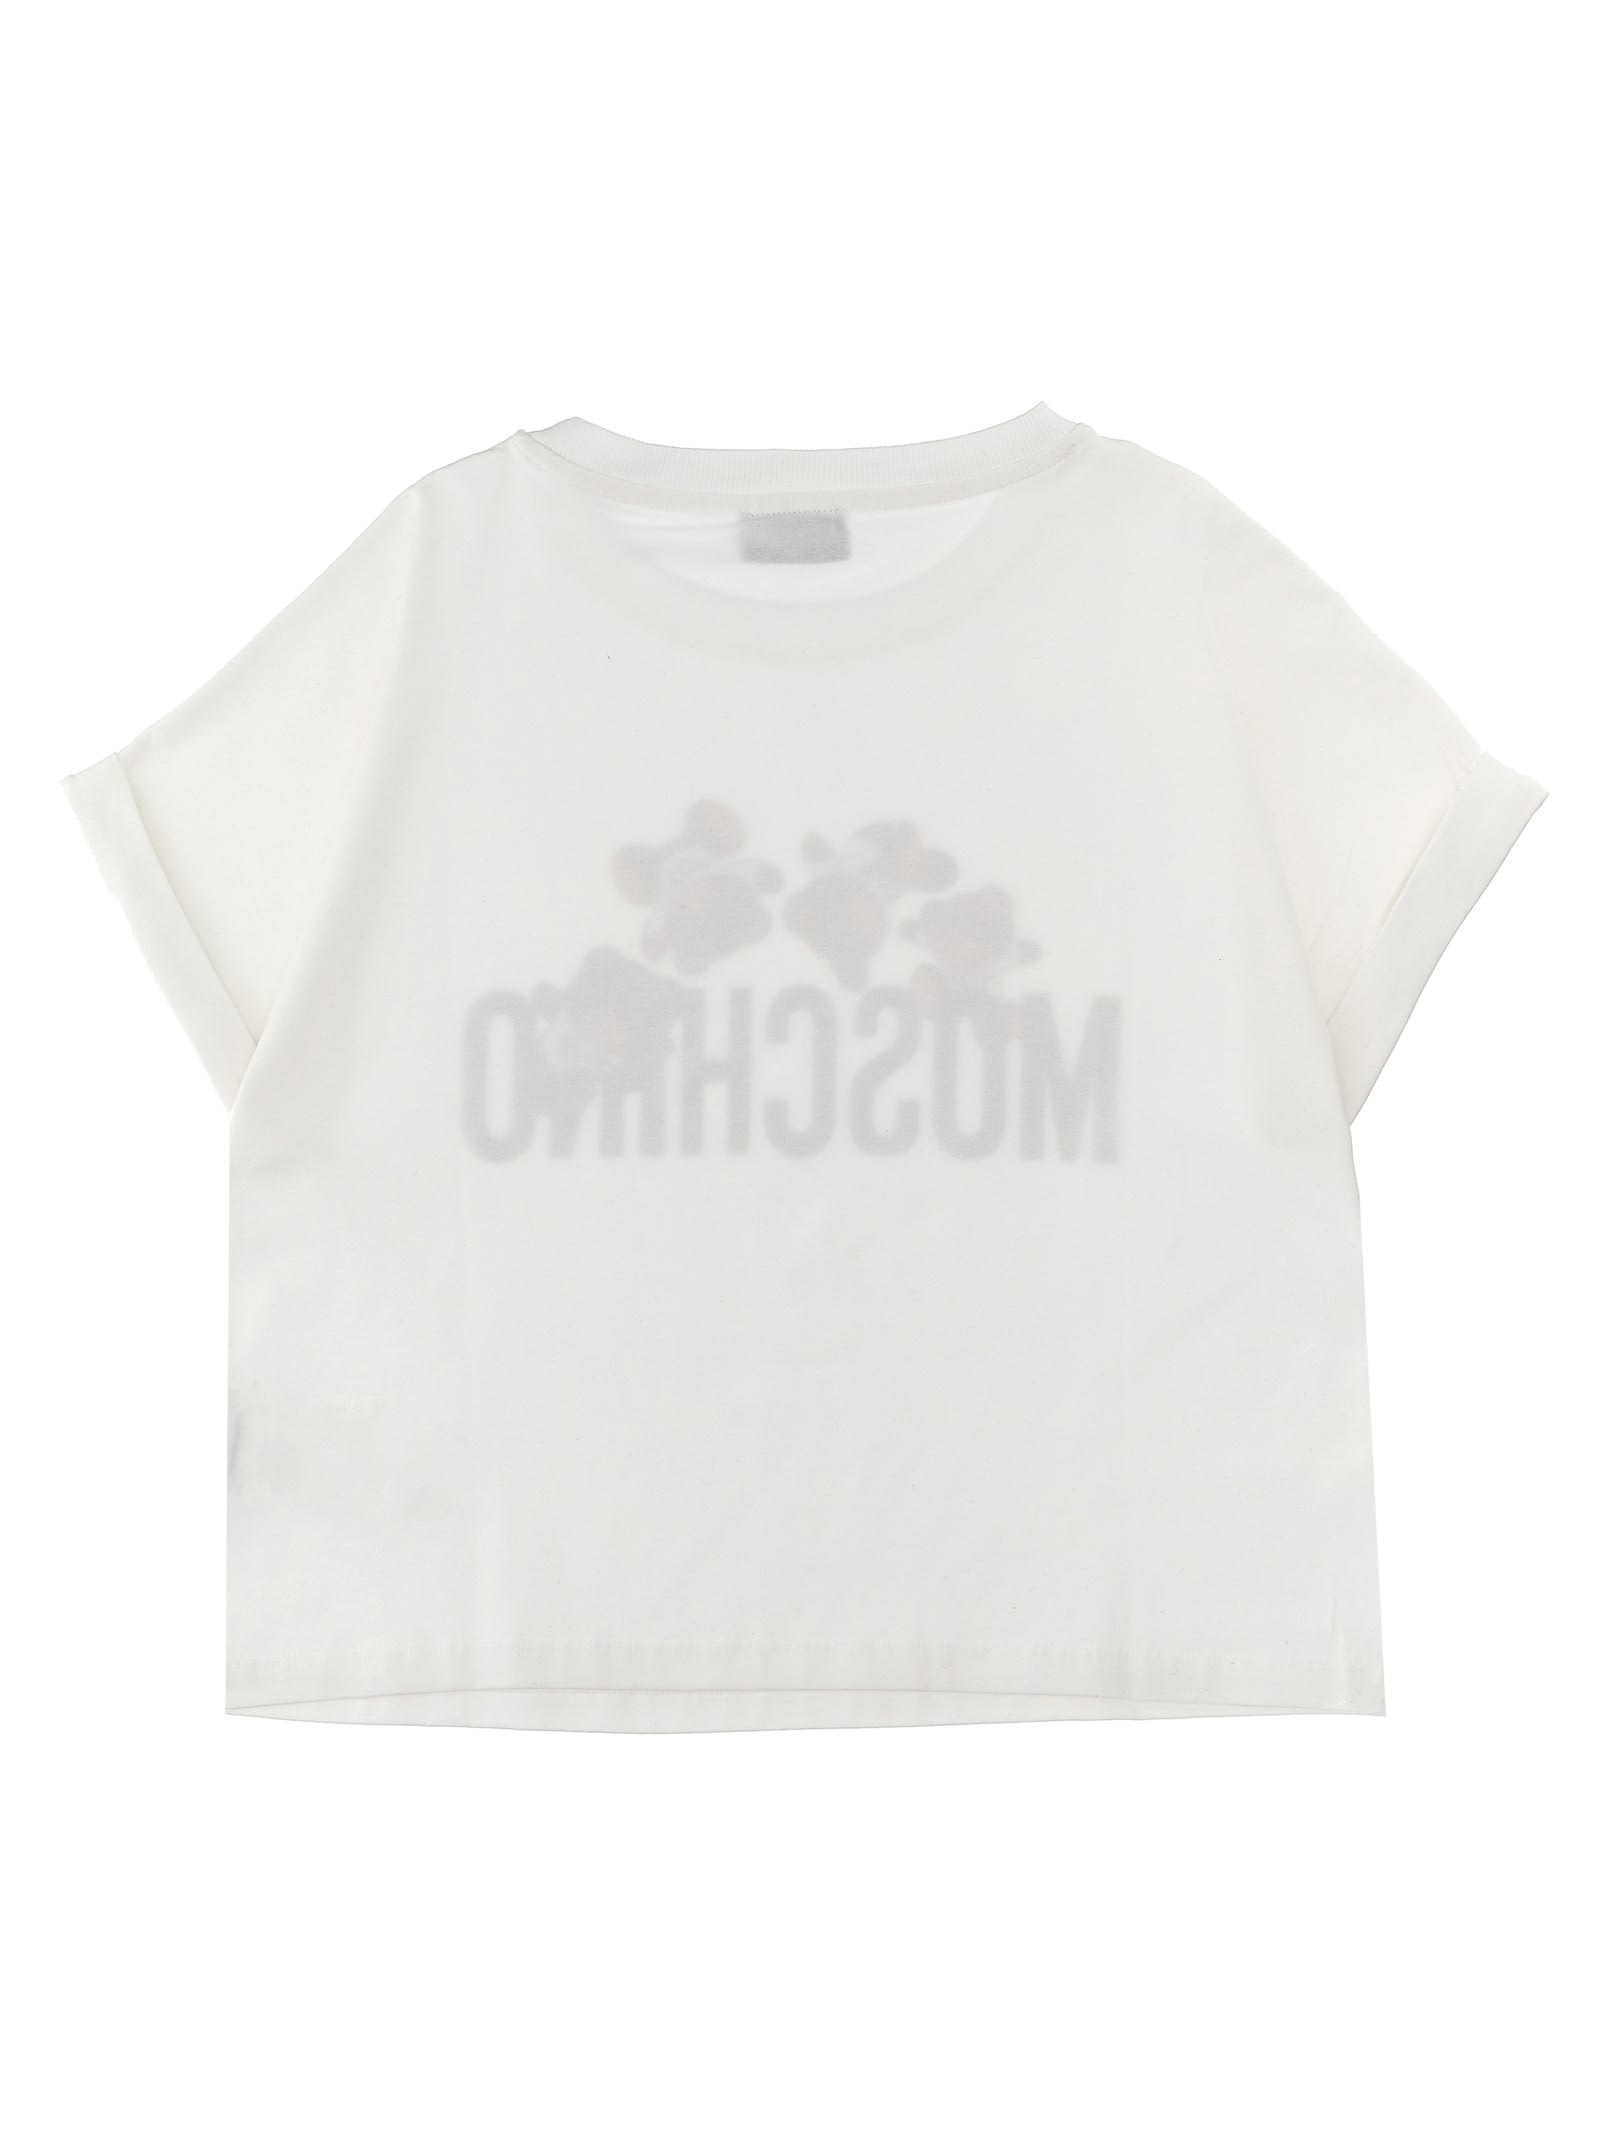 Moschino Set - T-shirt/Leggings - White/Black w. Print